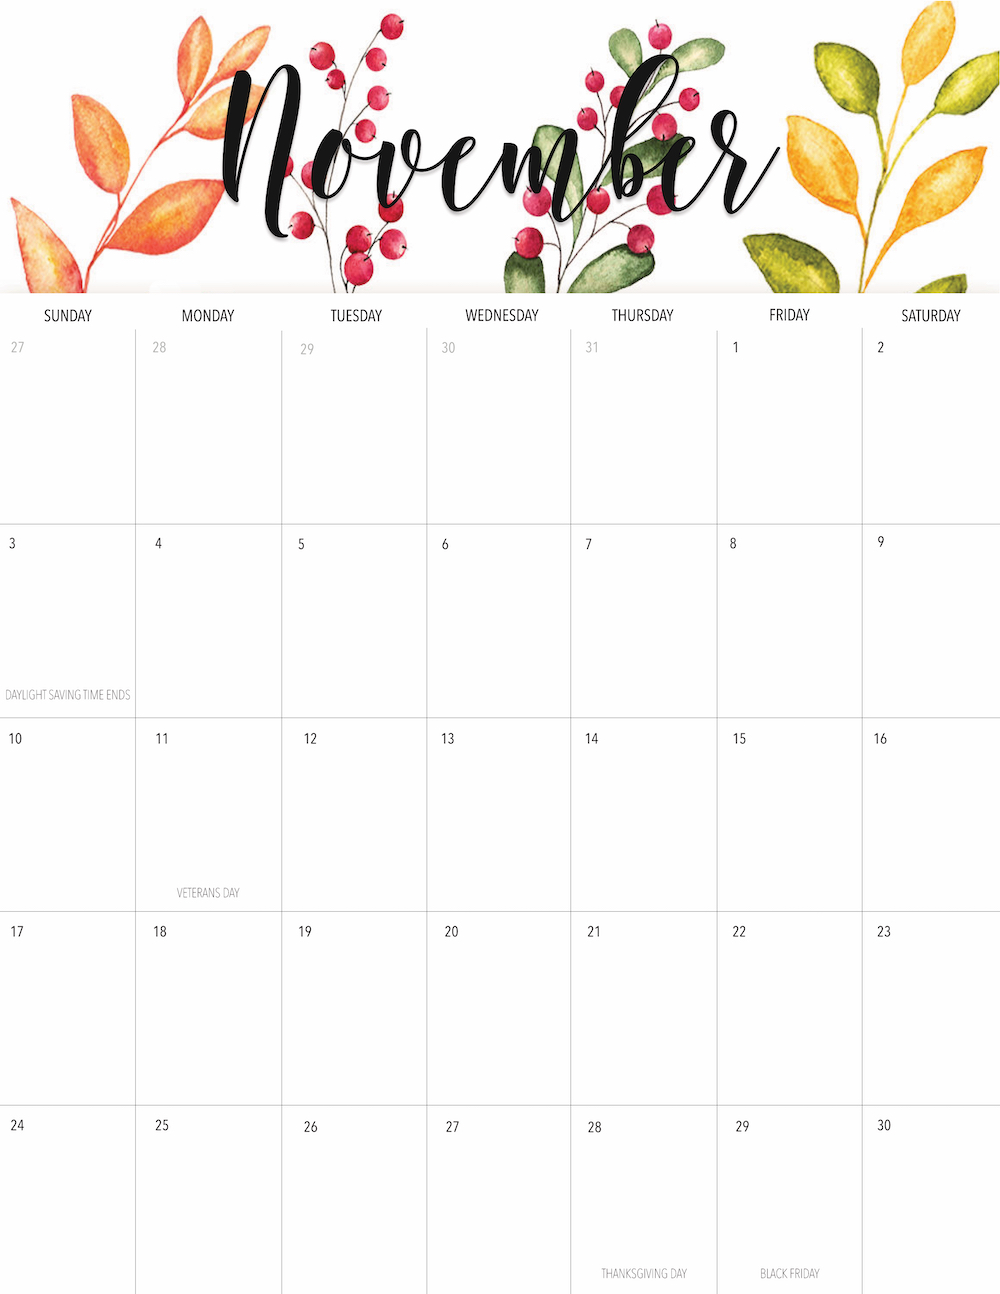 Welcome November + Free November 2019 Printable Calendar! • The ...